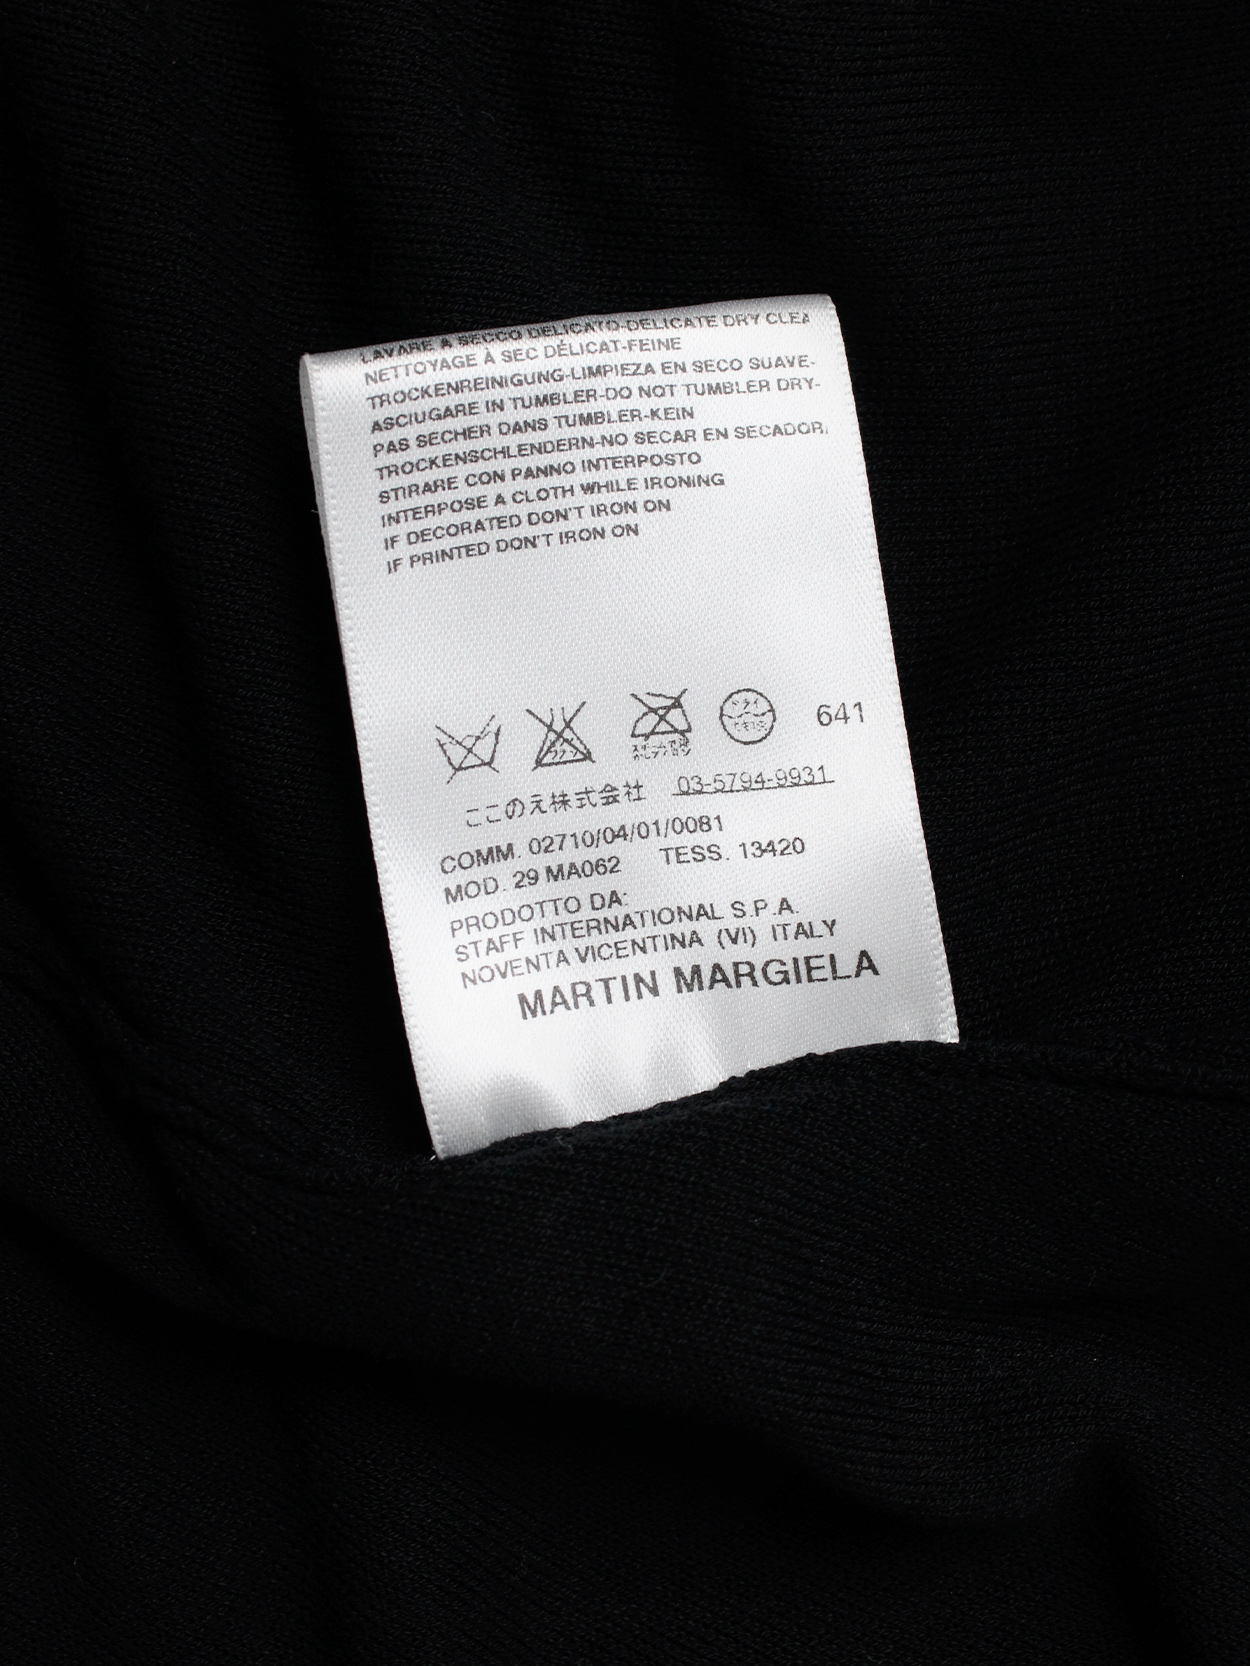 Maison Martin Margiela skirt or top with high-low hemline — spring 2008 ...